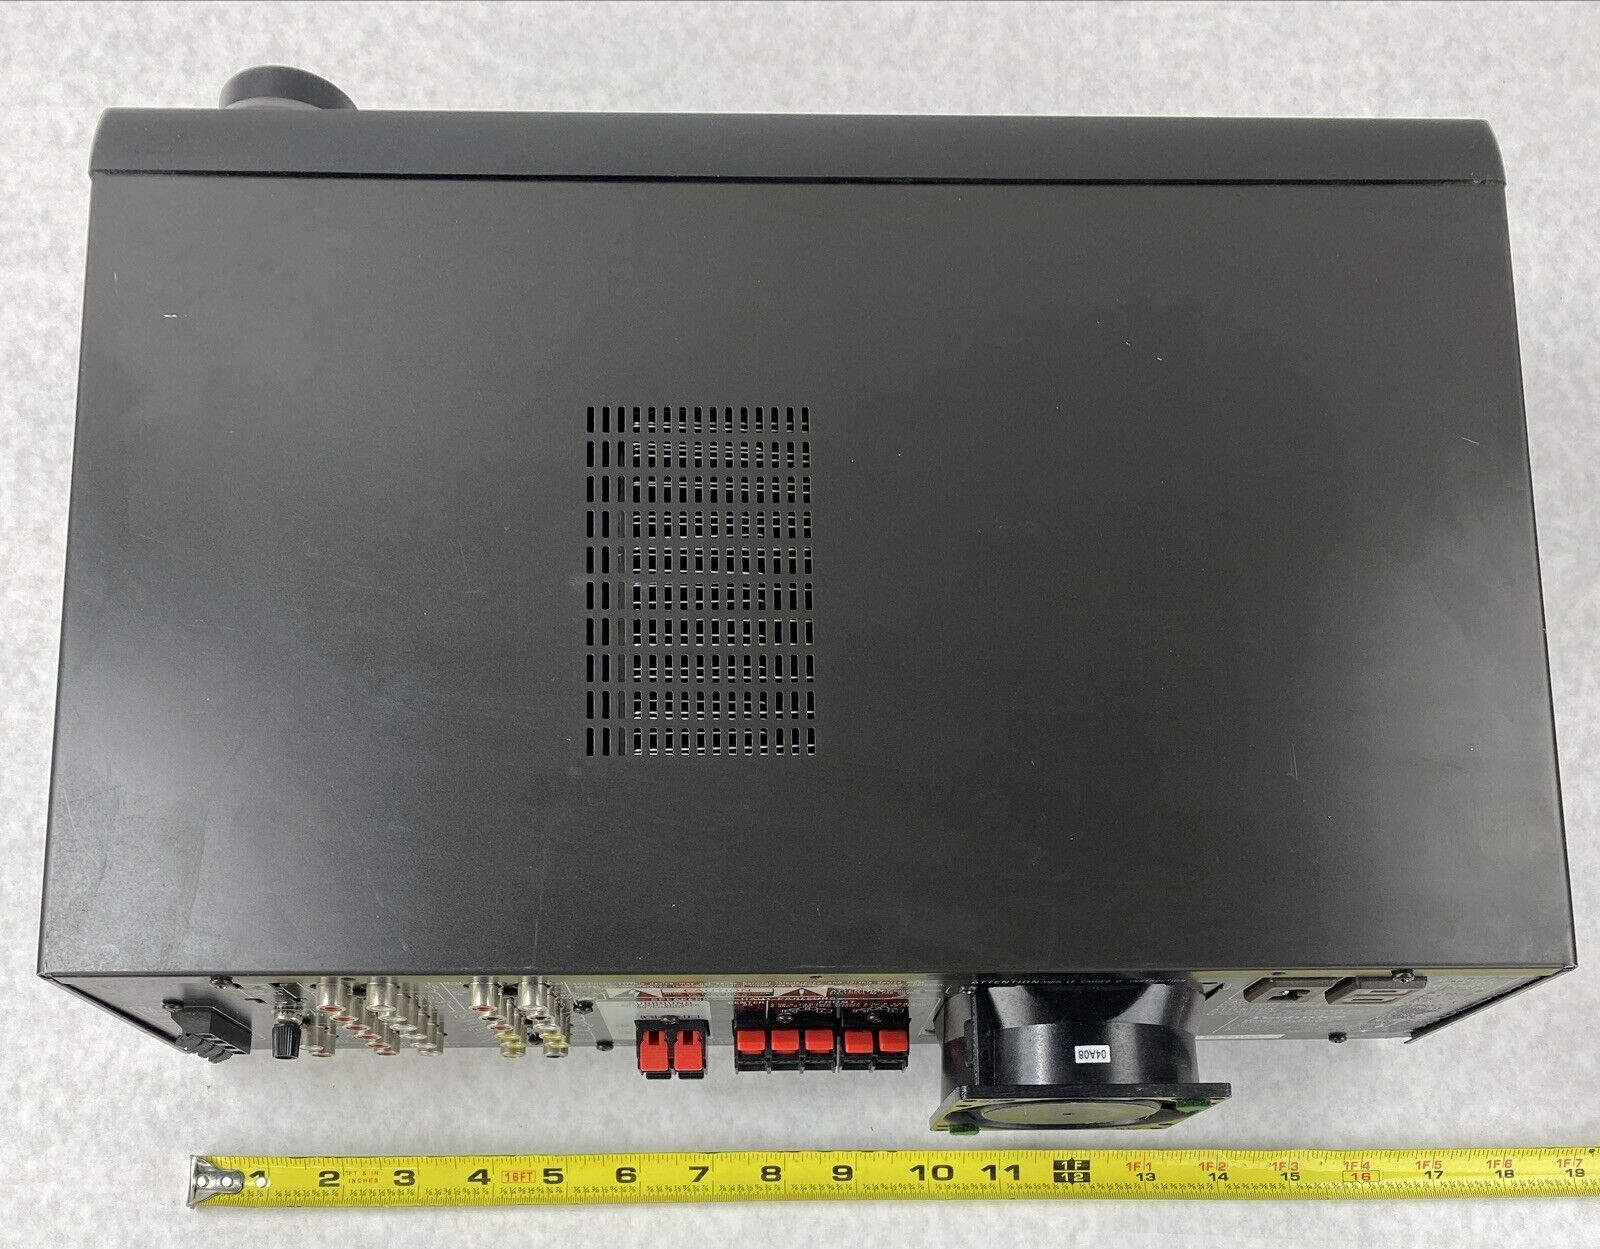 Technics SA-AX540 AV Control Stereo Receiver 5.1 Channel Tested NO REMOTE